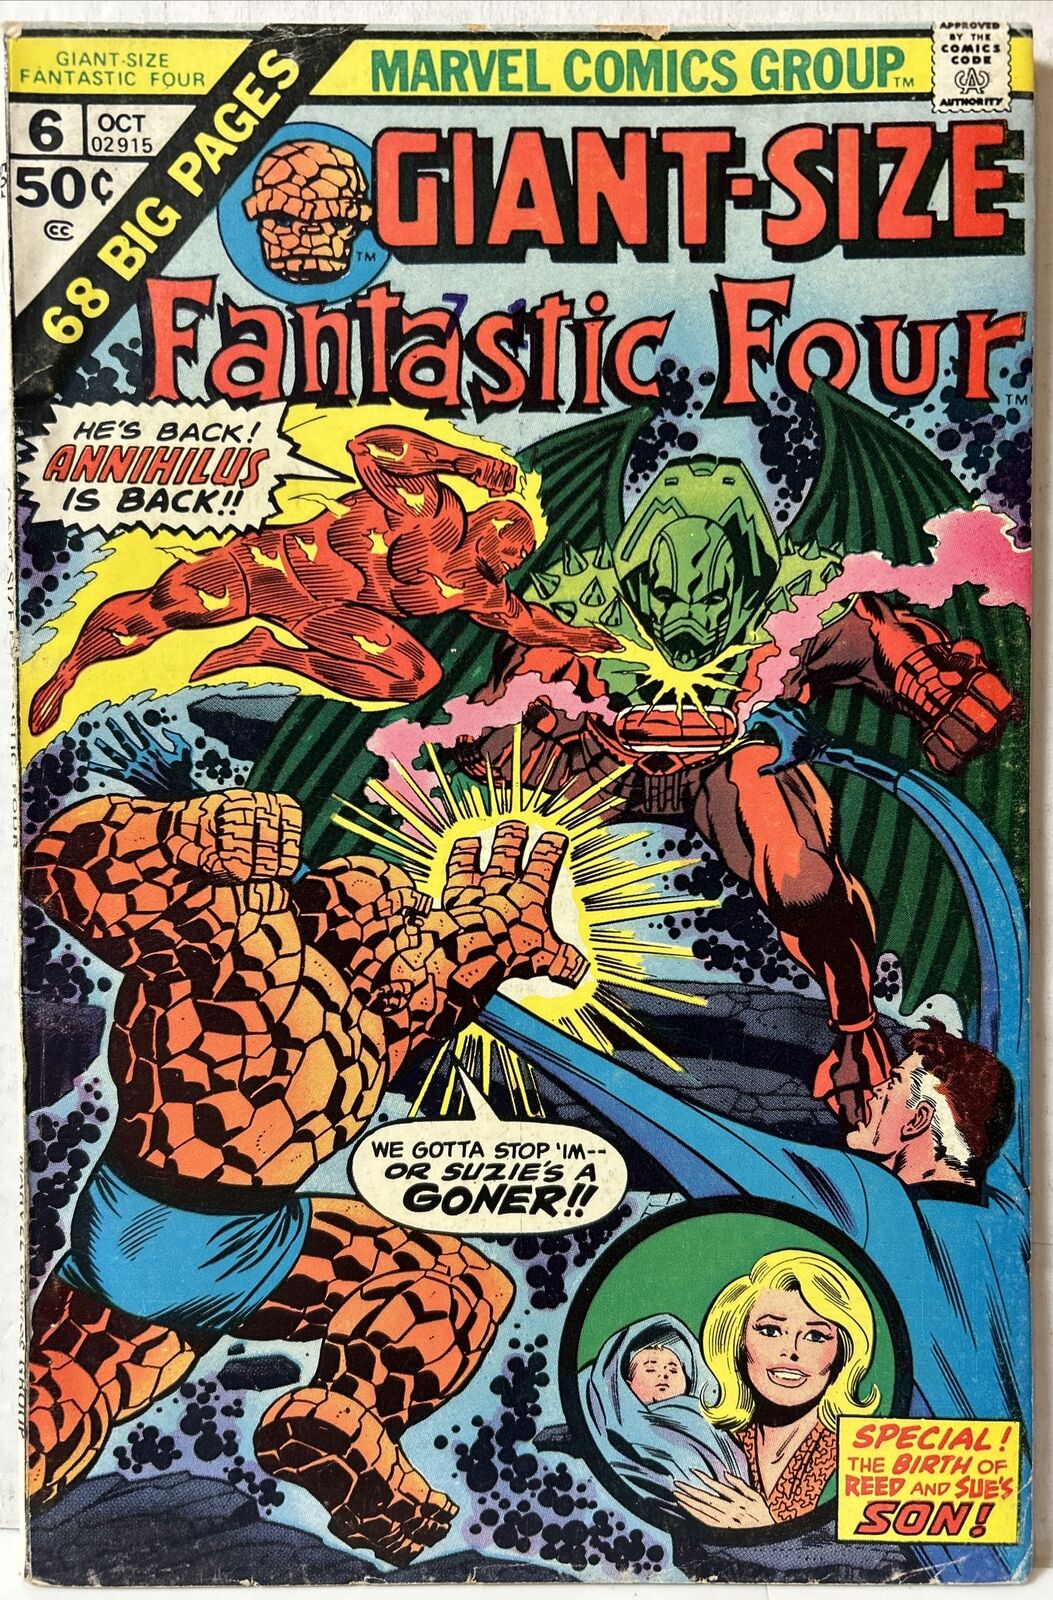 Giant-Size Fantastic Four #6 Marvel 1975 *VG+*